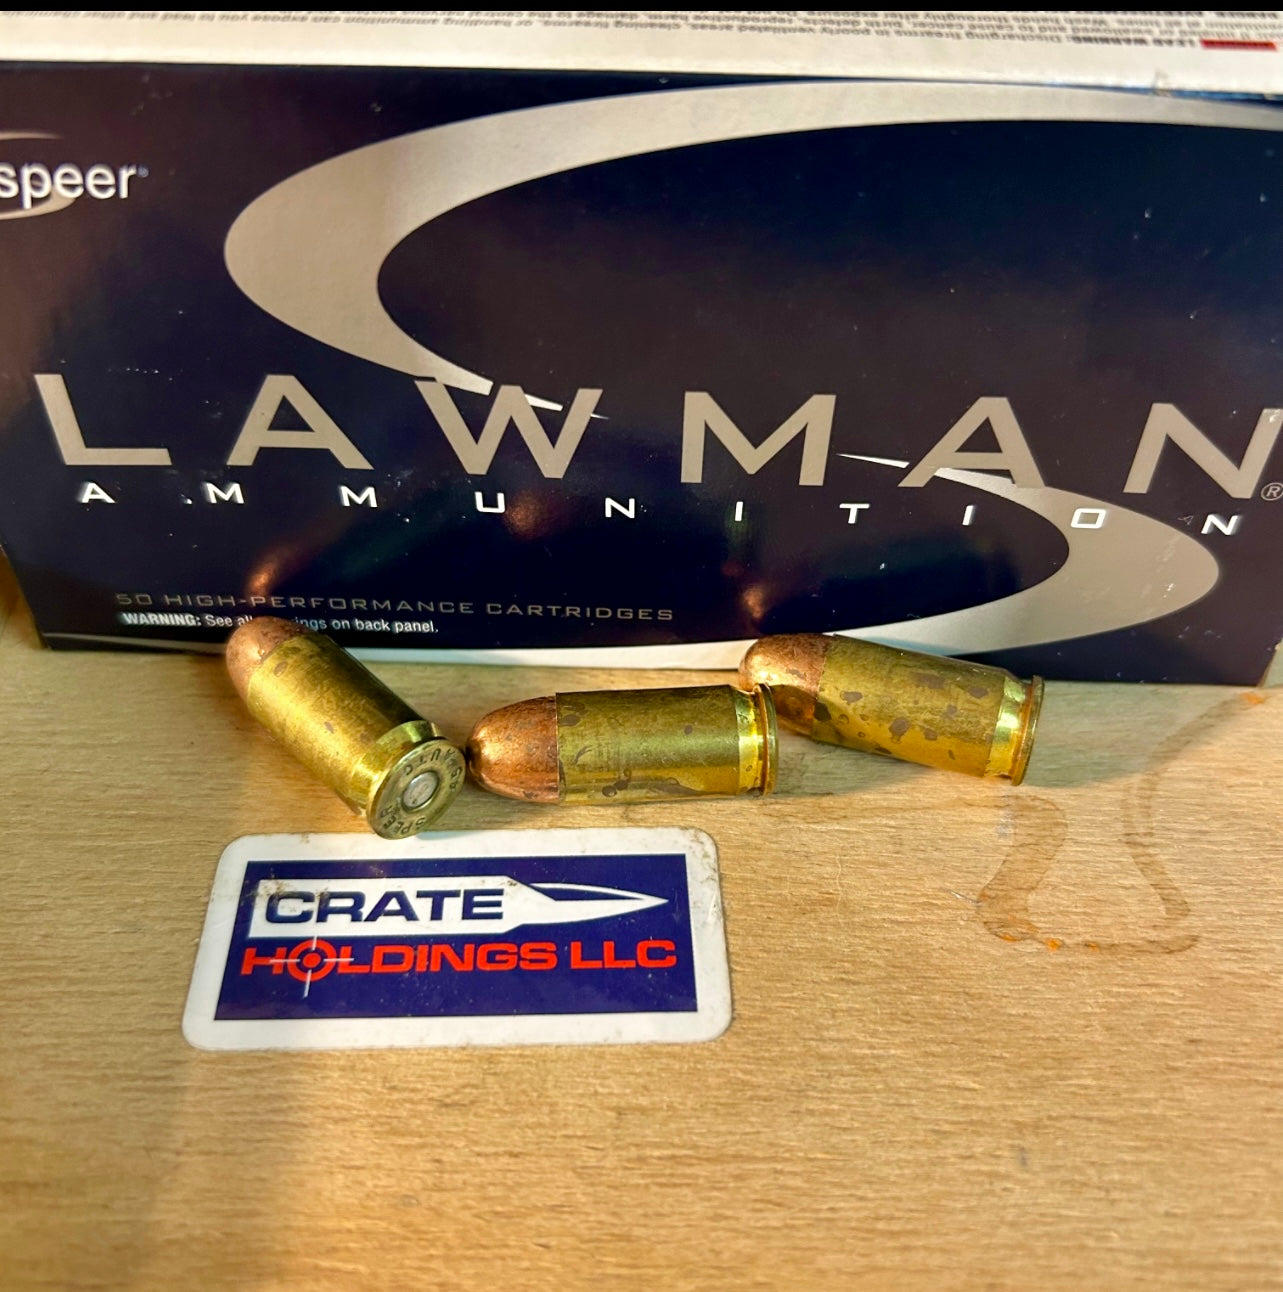 50 Round Box Speer Lawman Cleanfire .45 ACP / Auto Ammo 230gr TMJ (LE Trade) New - 53885